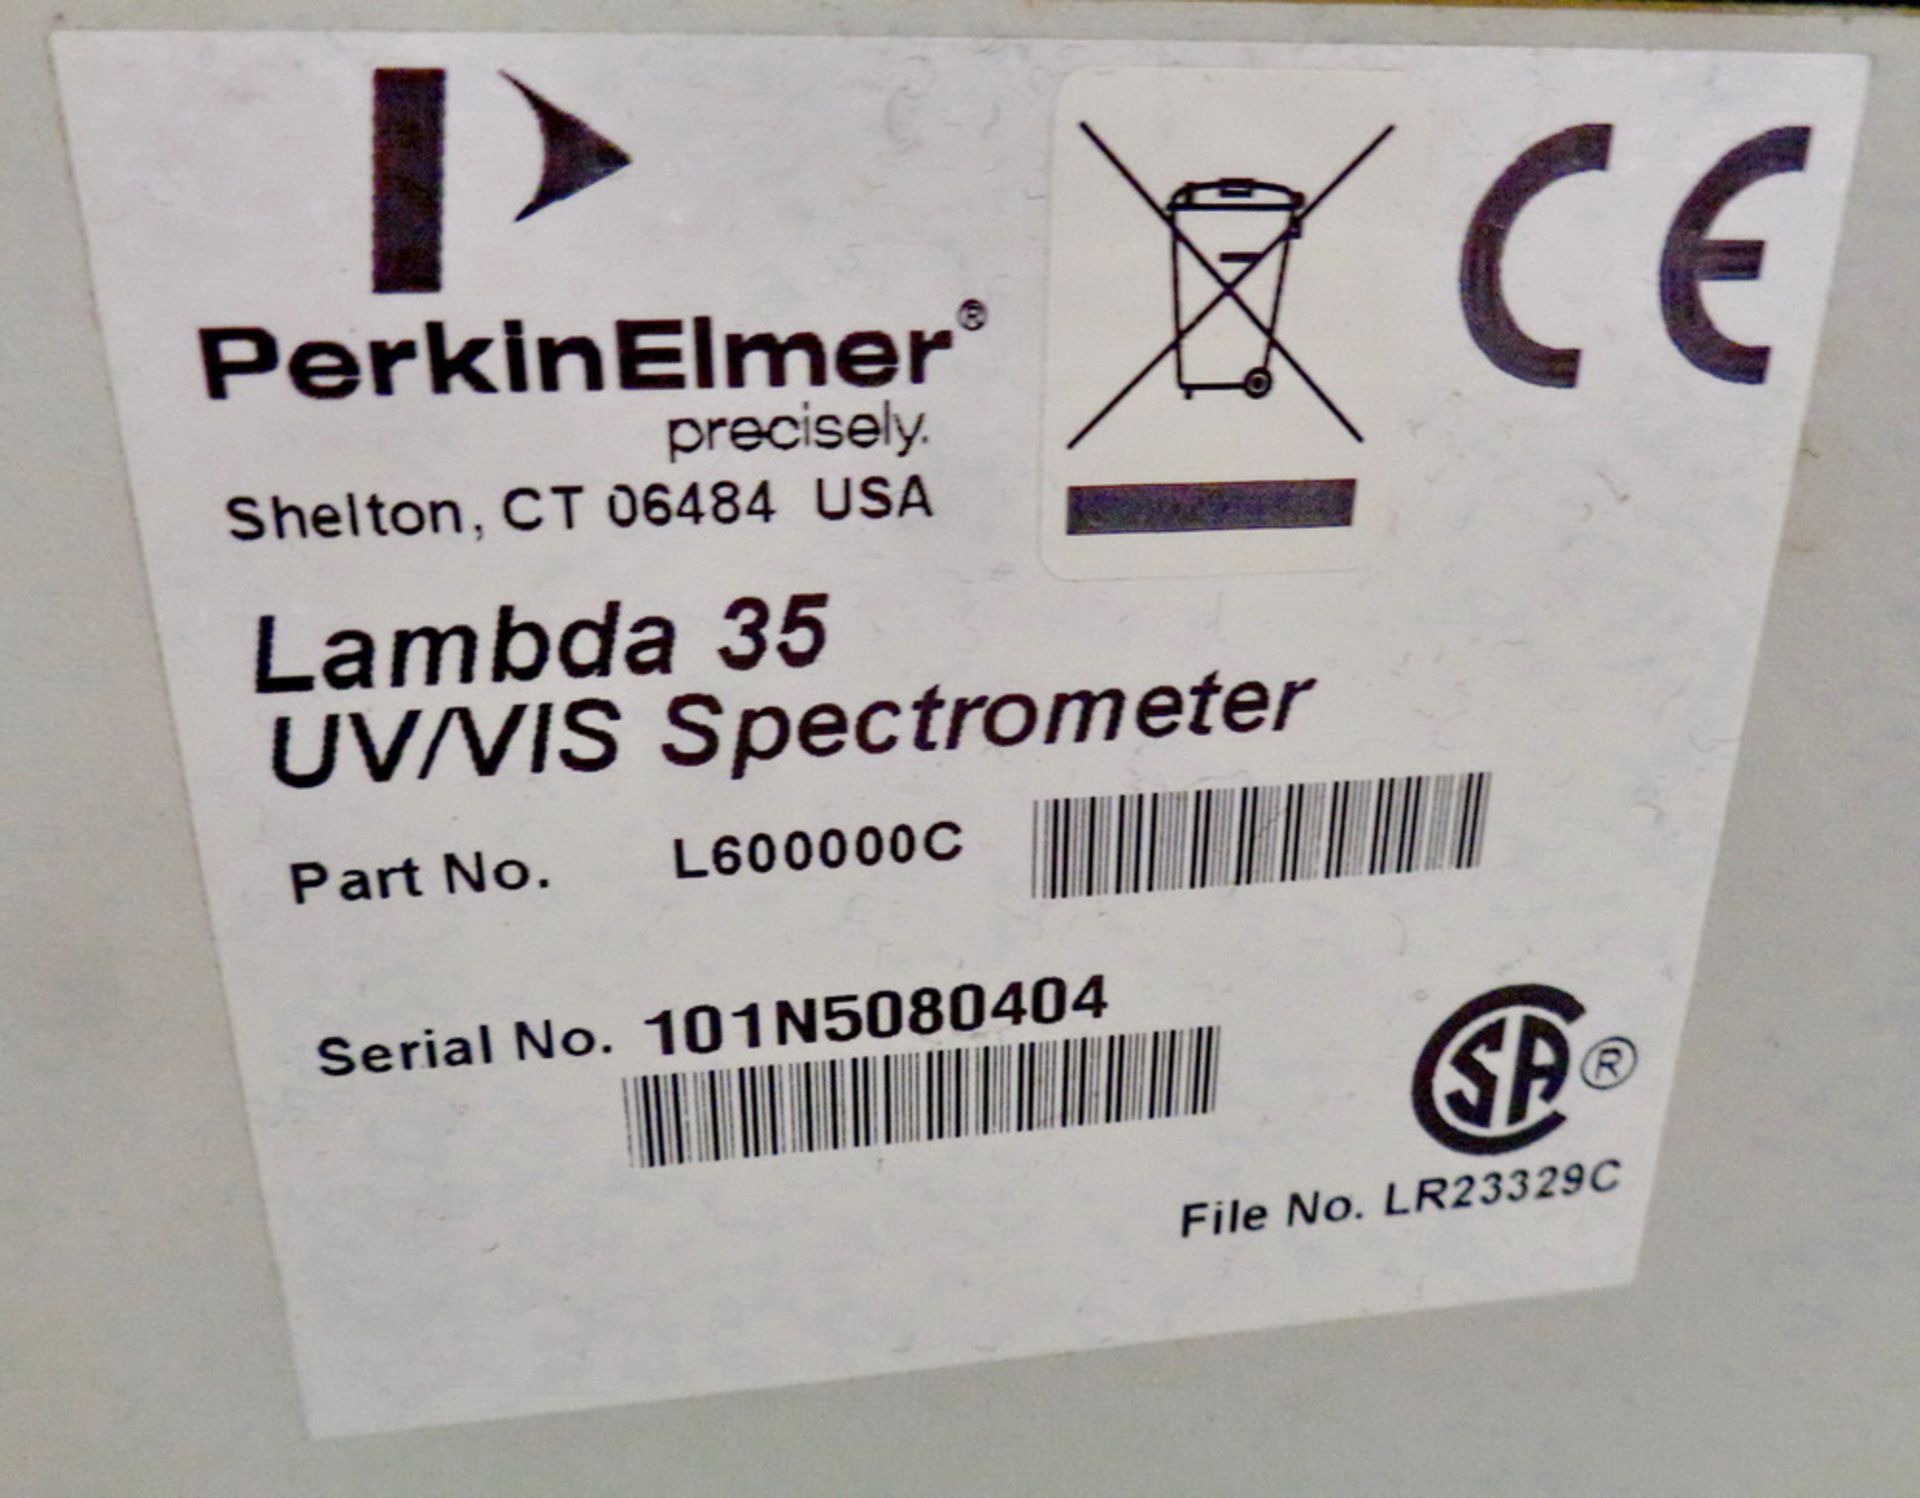 Perkin Elmer UV/VIS Spectrometer, Lambda 35 - Image 5 of 6